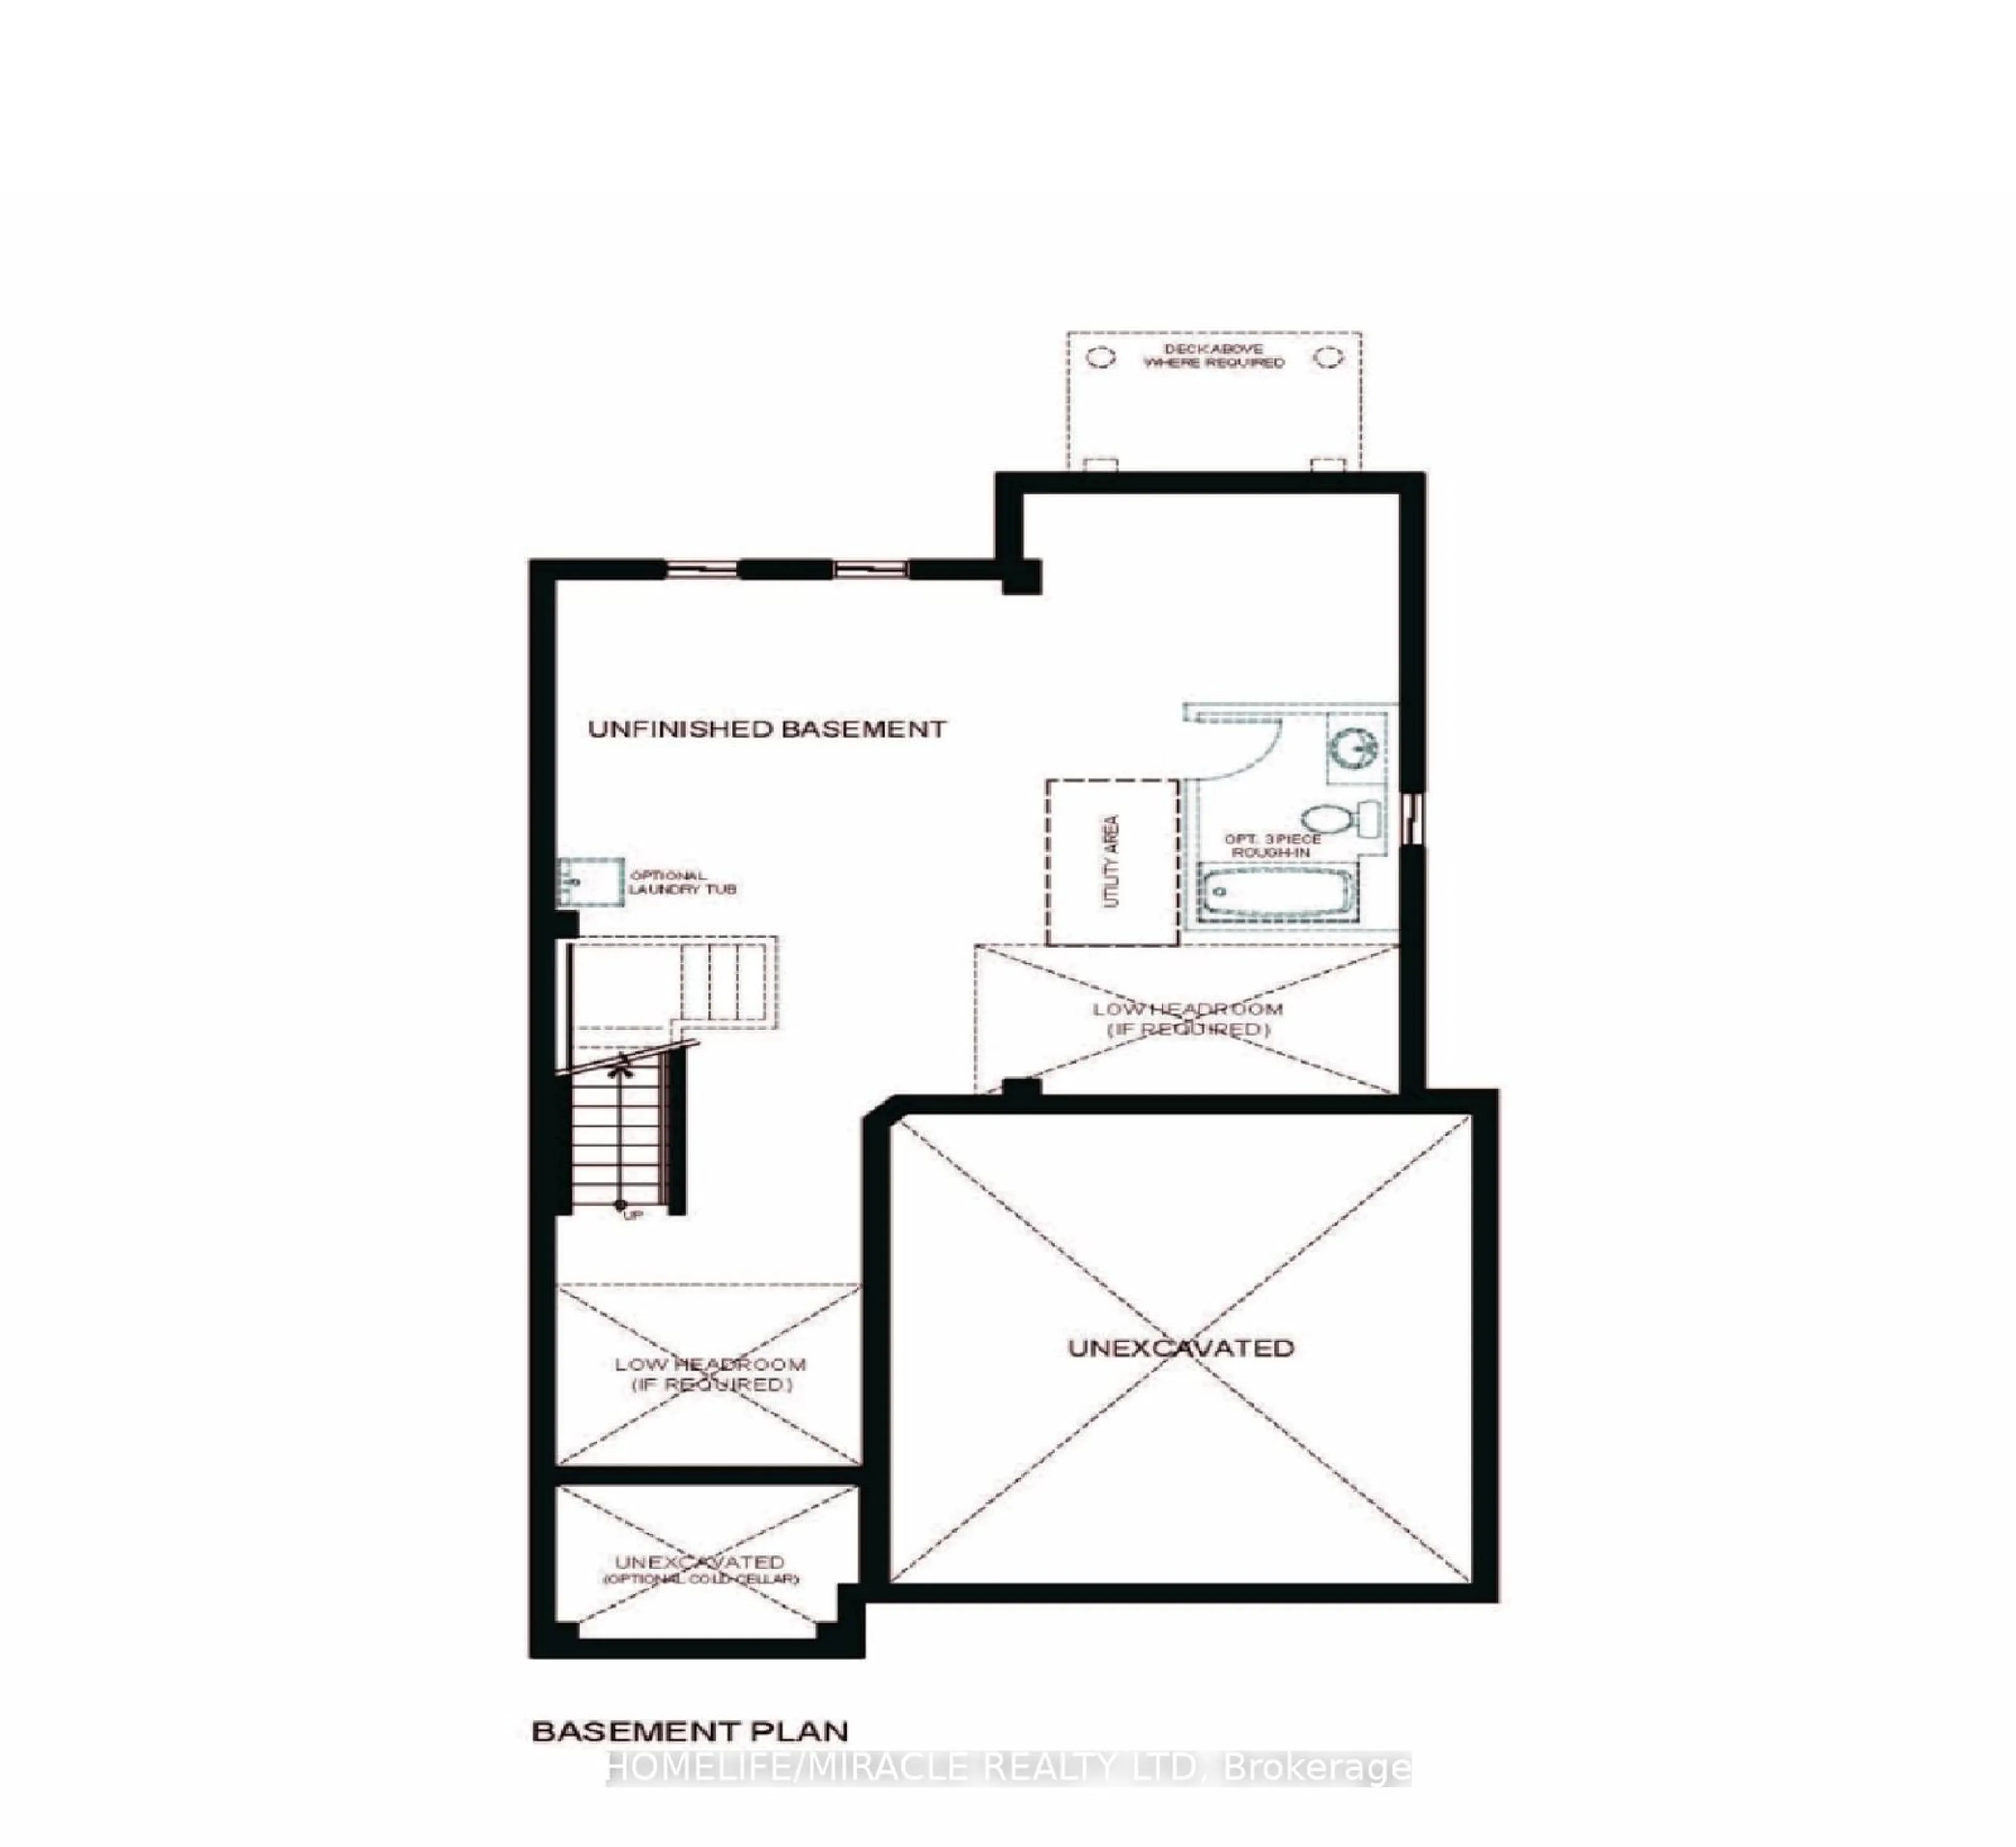 Floor plan for Lot 253 Pottruff Rd, Brant Ontario L1L 1L1